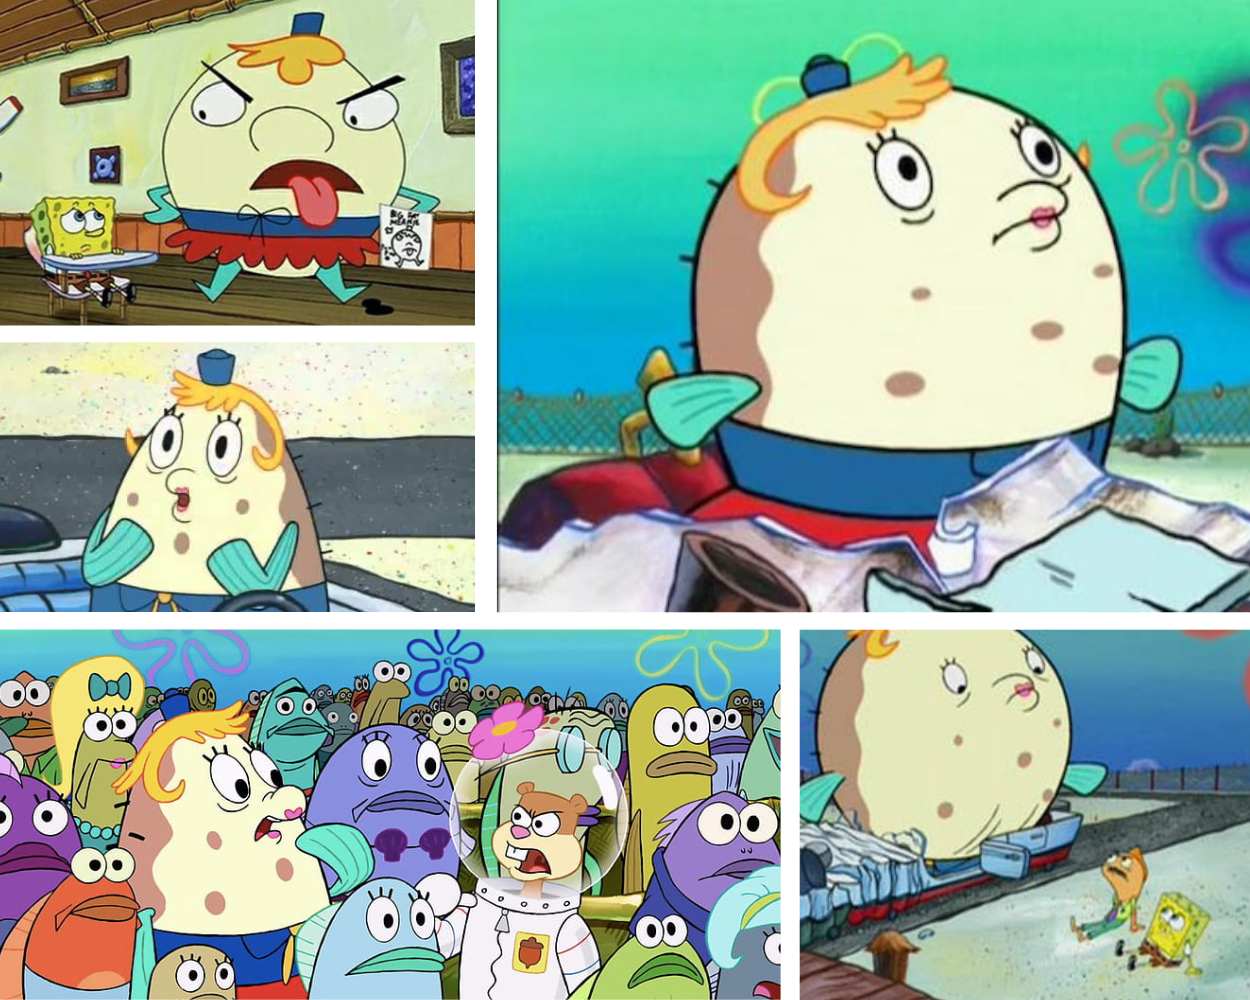 Mrs. Puff from Spongebob Squarepants